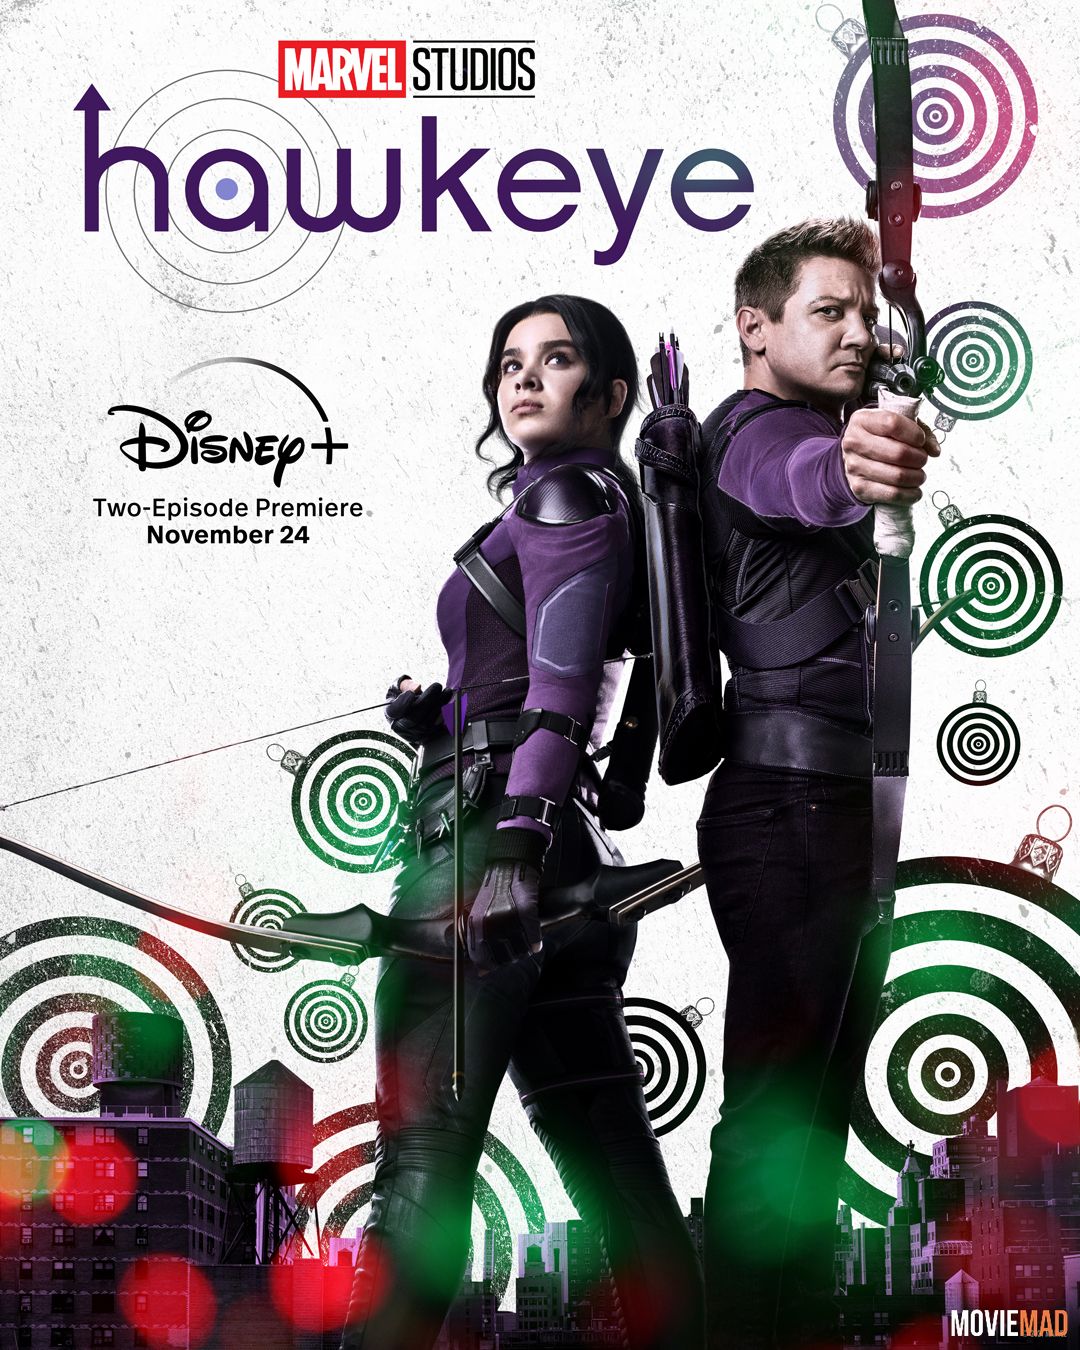 Hawkeye S01E04 (2021) Hindi Dubbed Complete DSPN Series HDRip 1080p 720p 480p